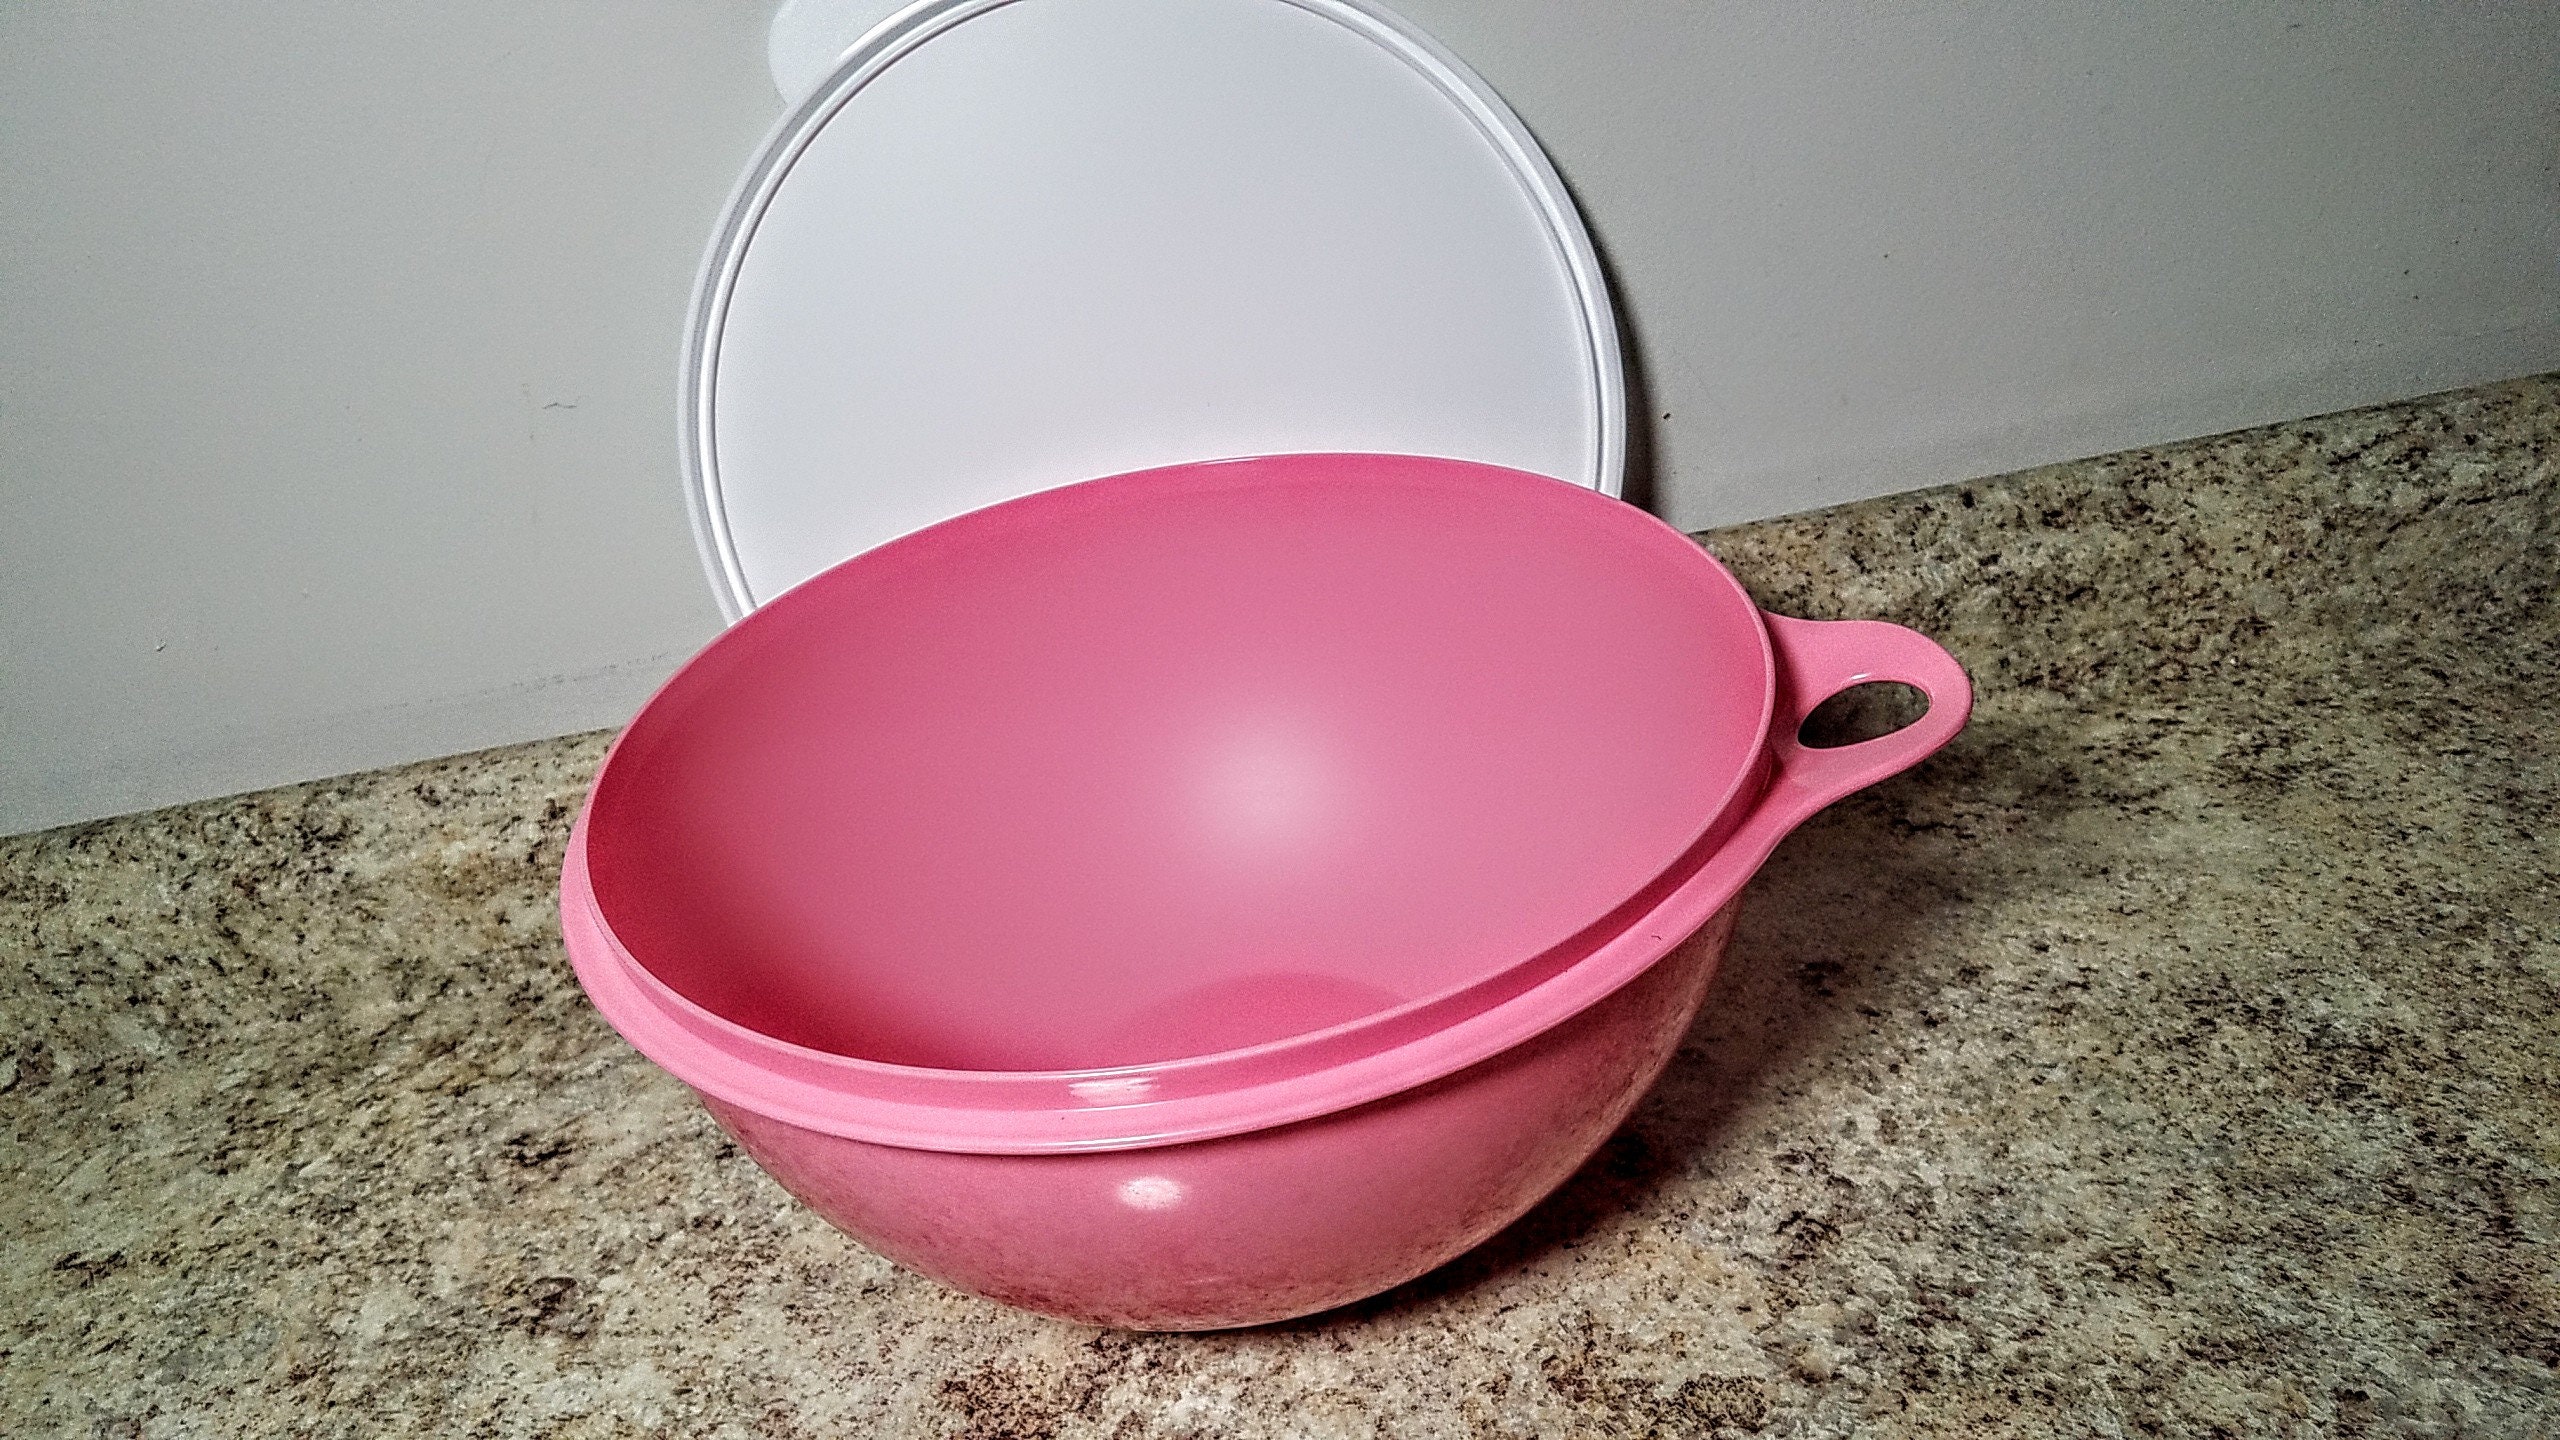 New Tupperware Large Thatsa Mixing Bowl Pink withPink Seal 32